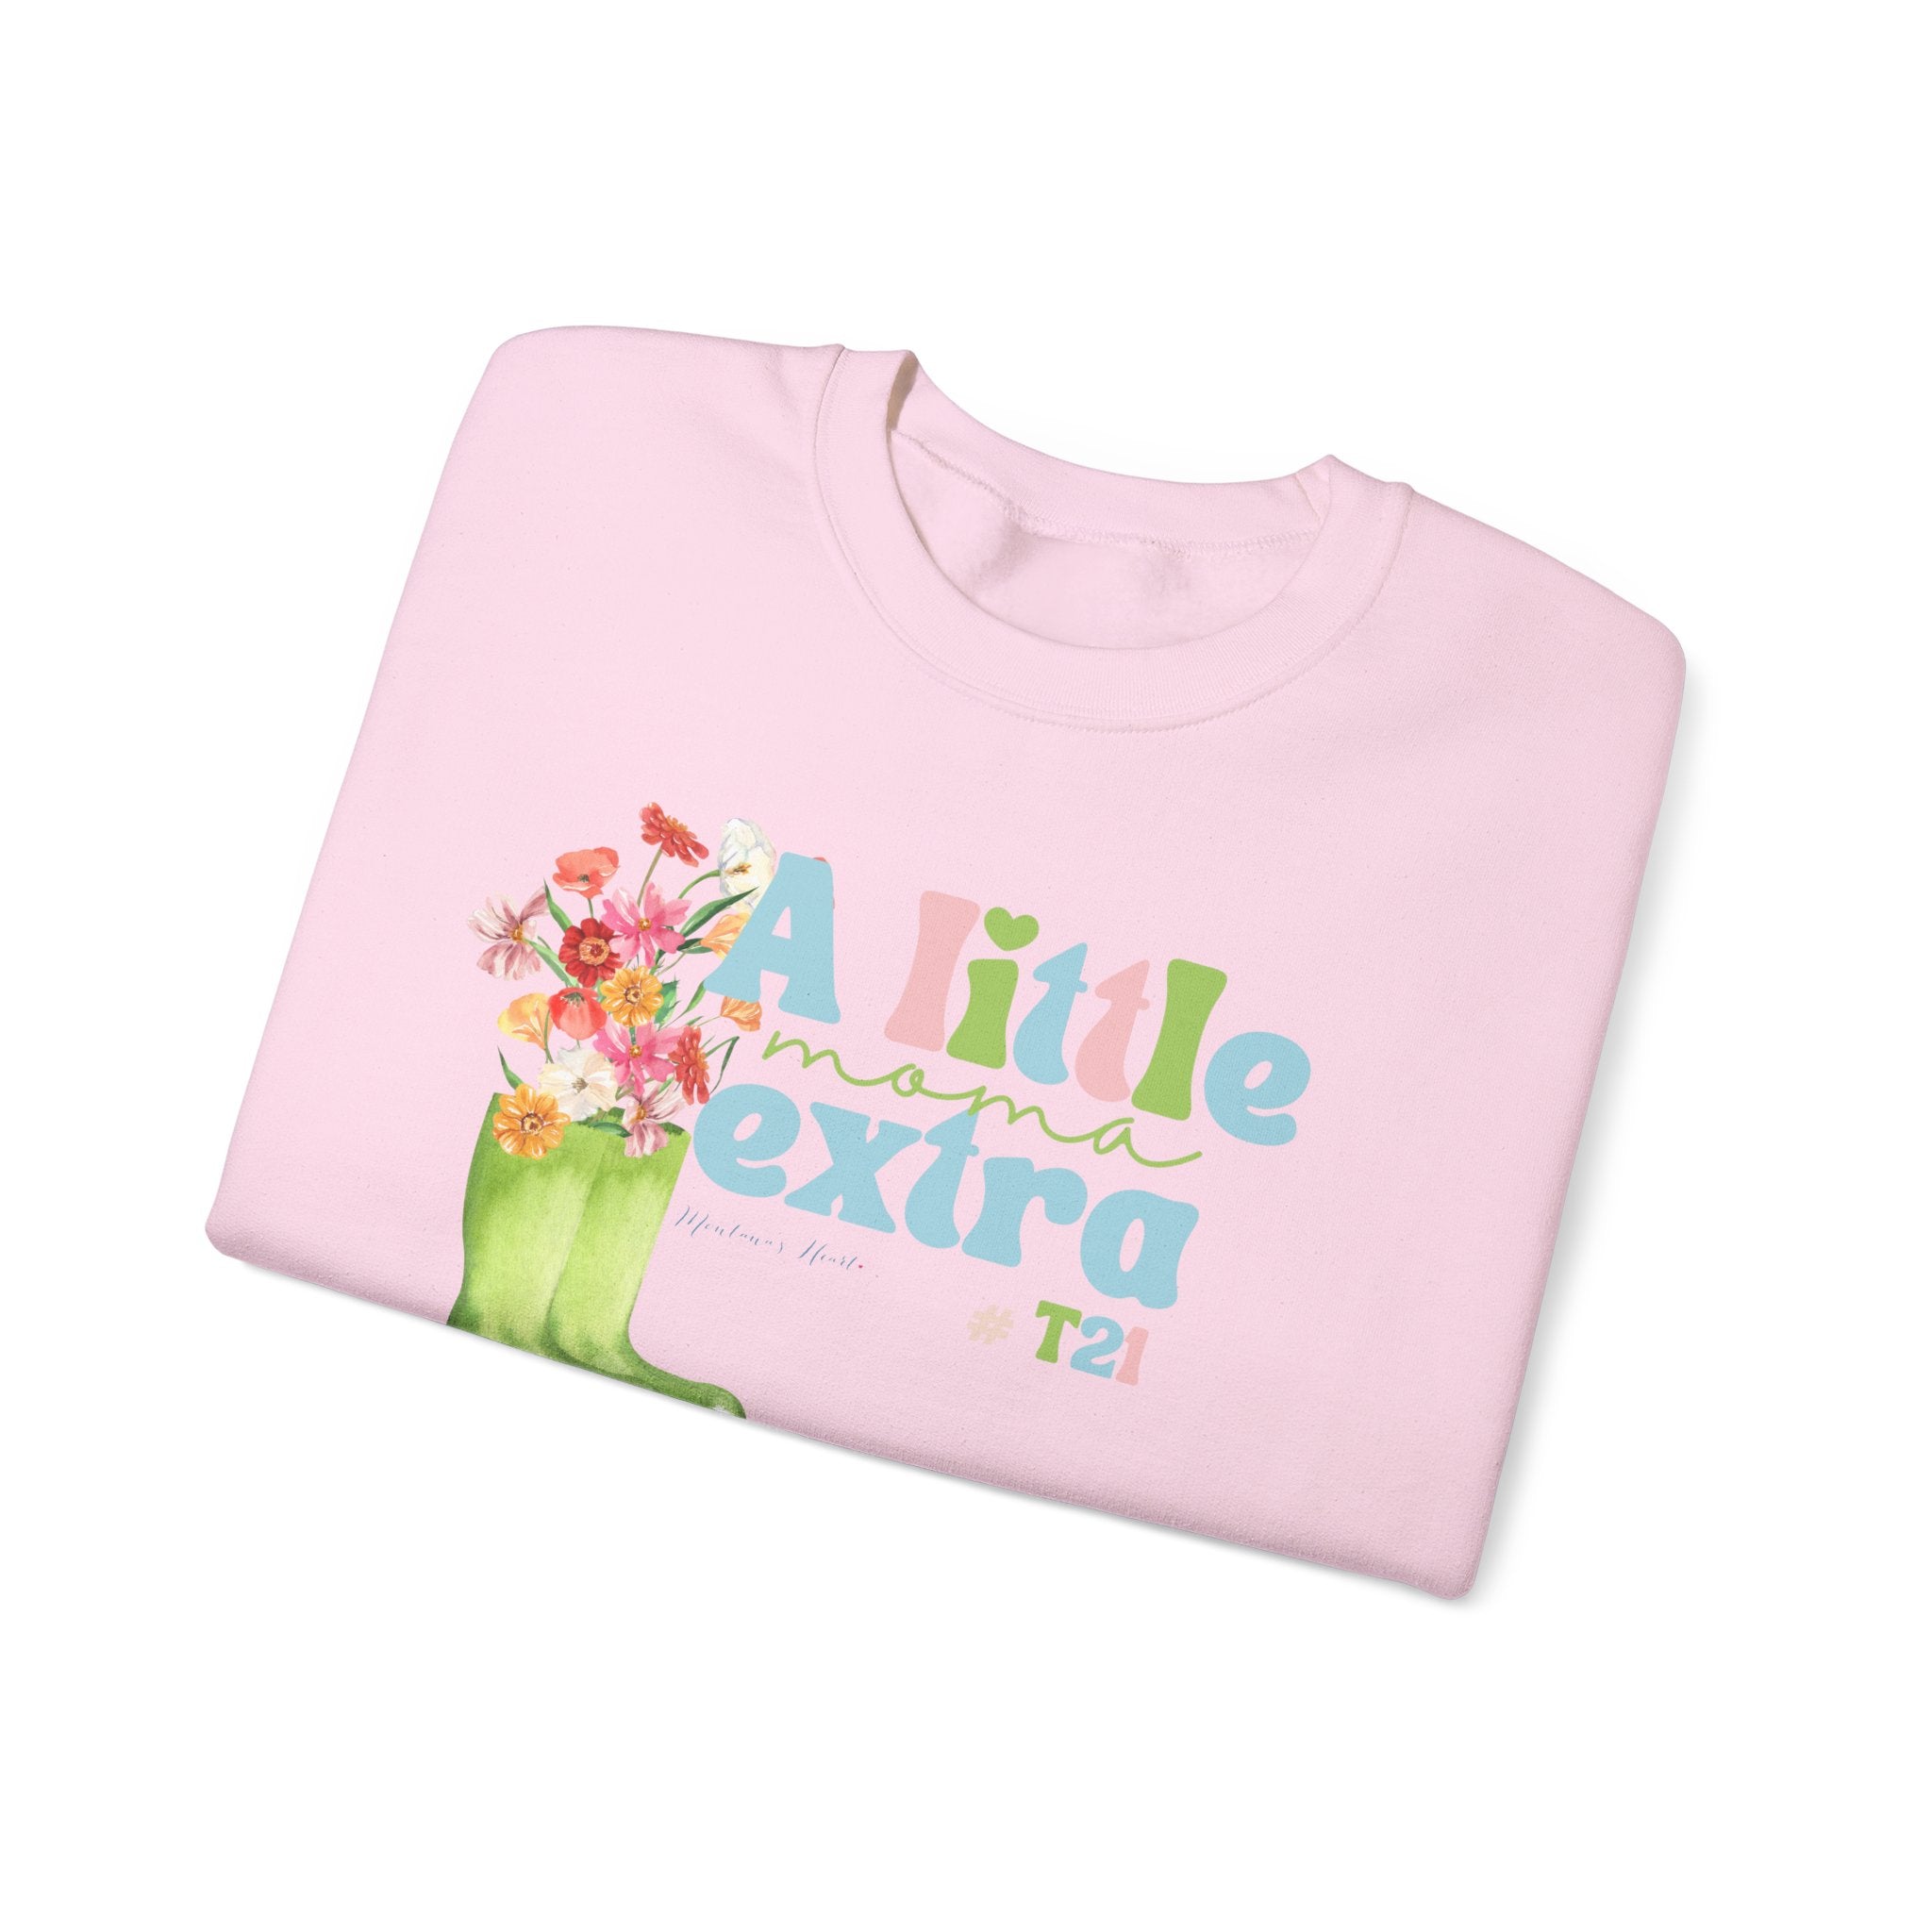 A little Extra Moma #T21 Ladies sweatshirt